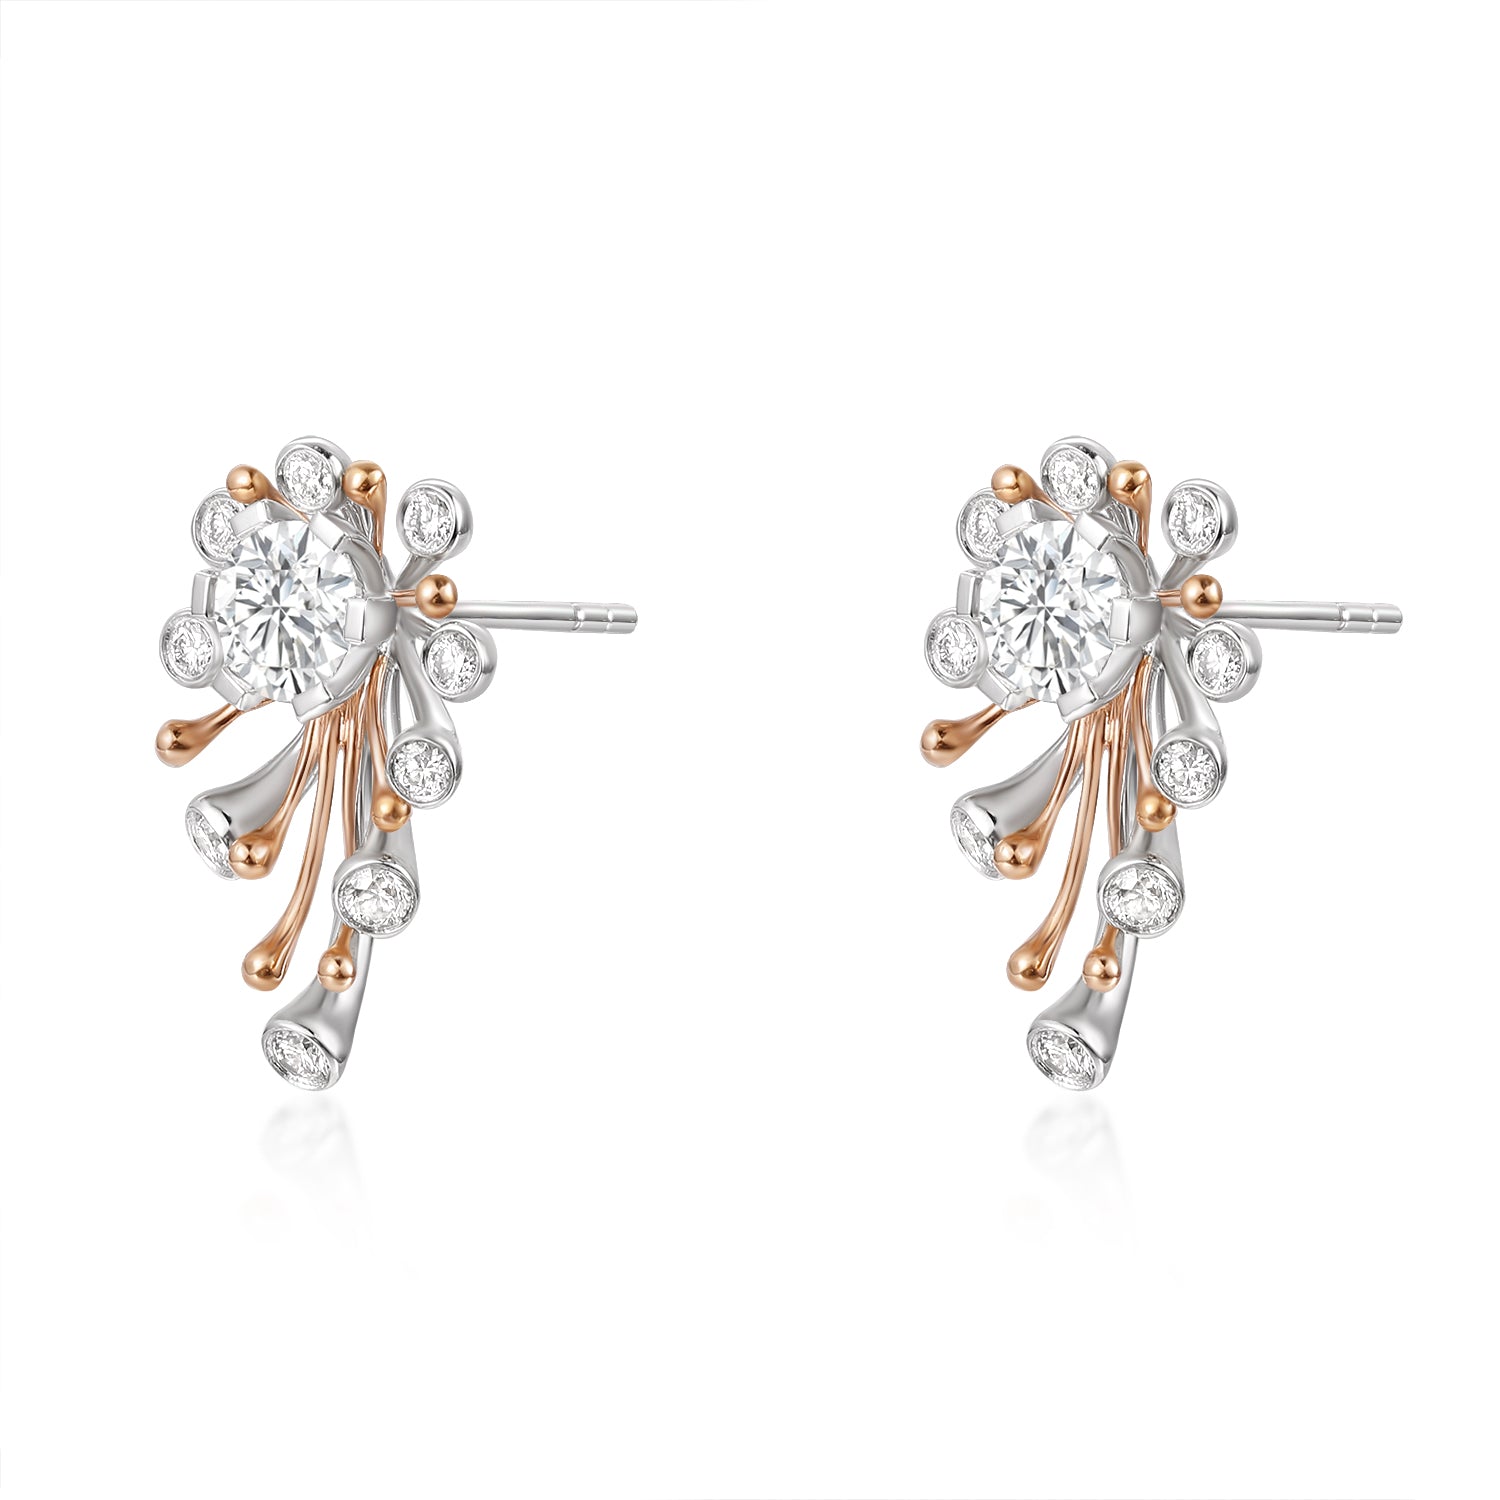 2 carat lab grown diamond earrings | Poyas Jewelry